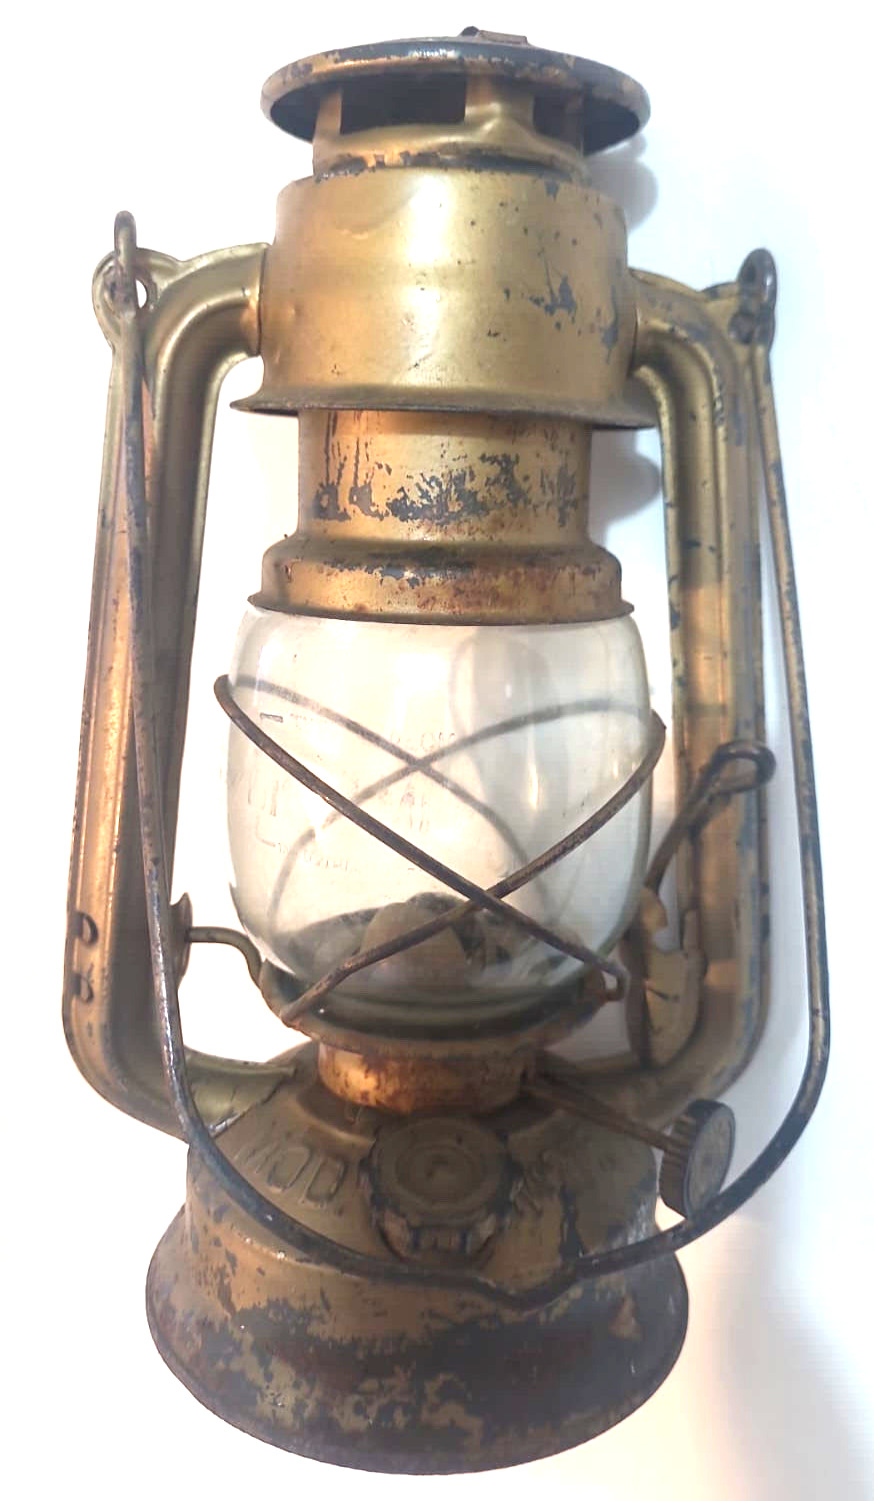 Antique Argentine Kerosene Lantern - Complete Vintage Beauty from the 1920s/30s